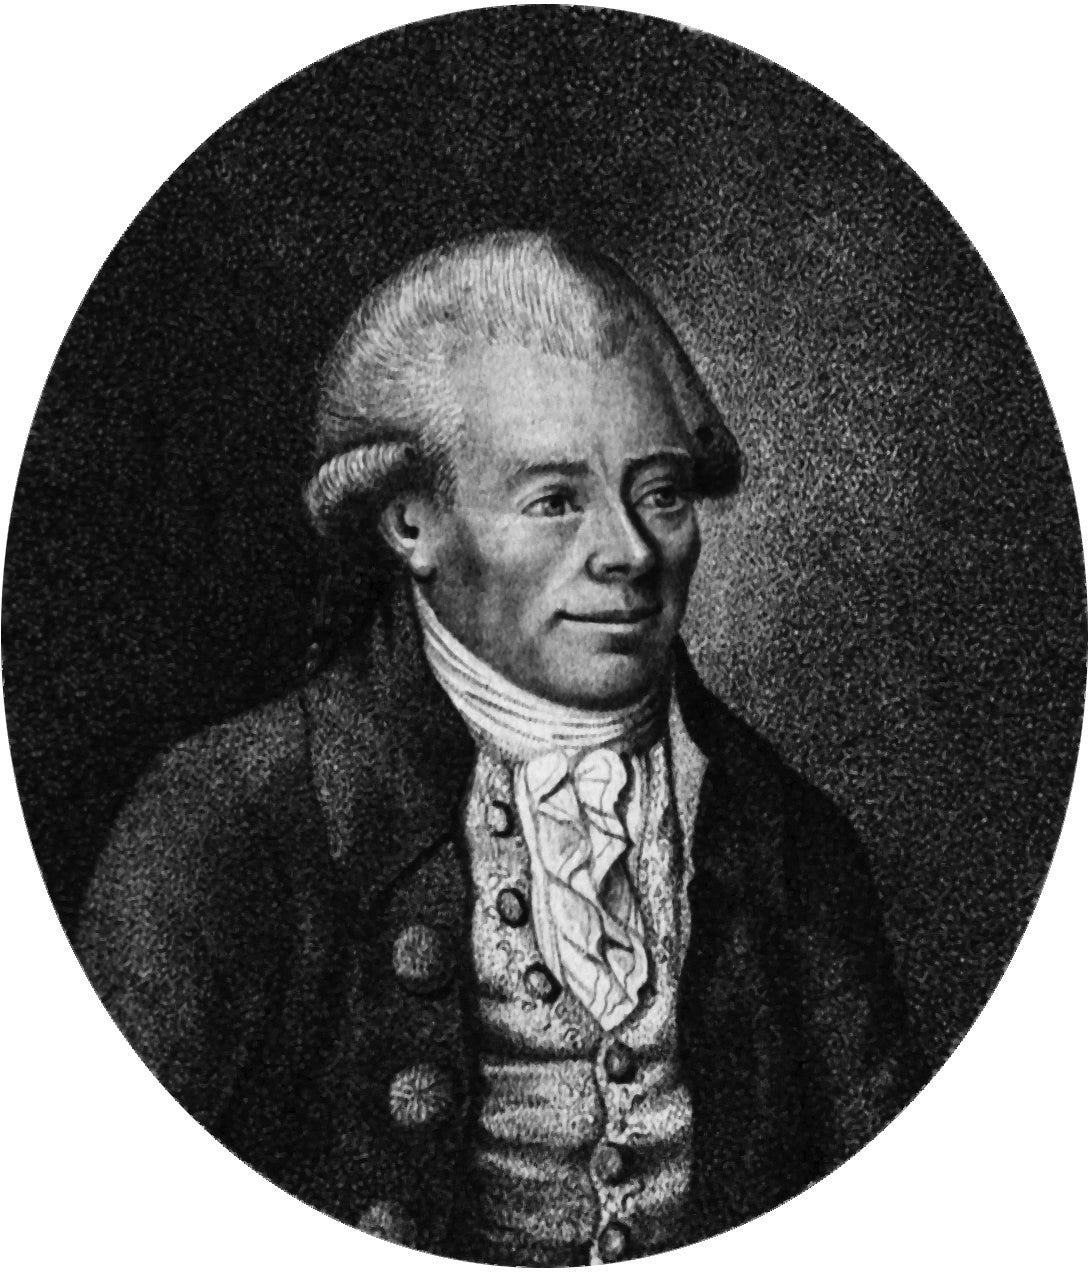 Engraving showing portrait of Georg Christoph Lichtenberg